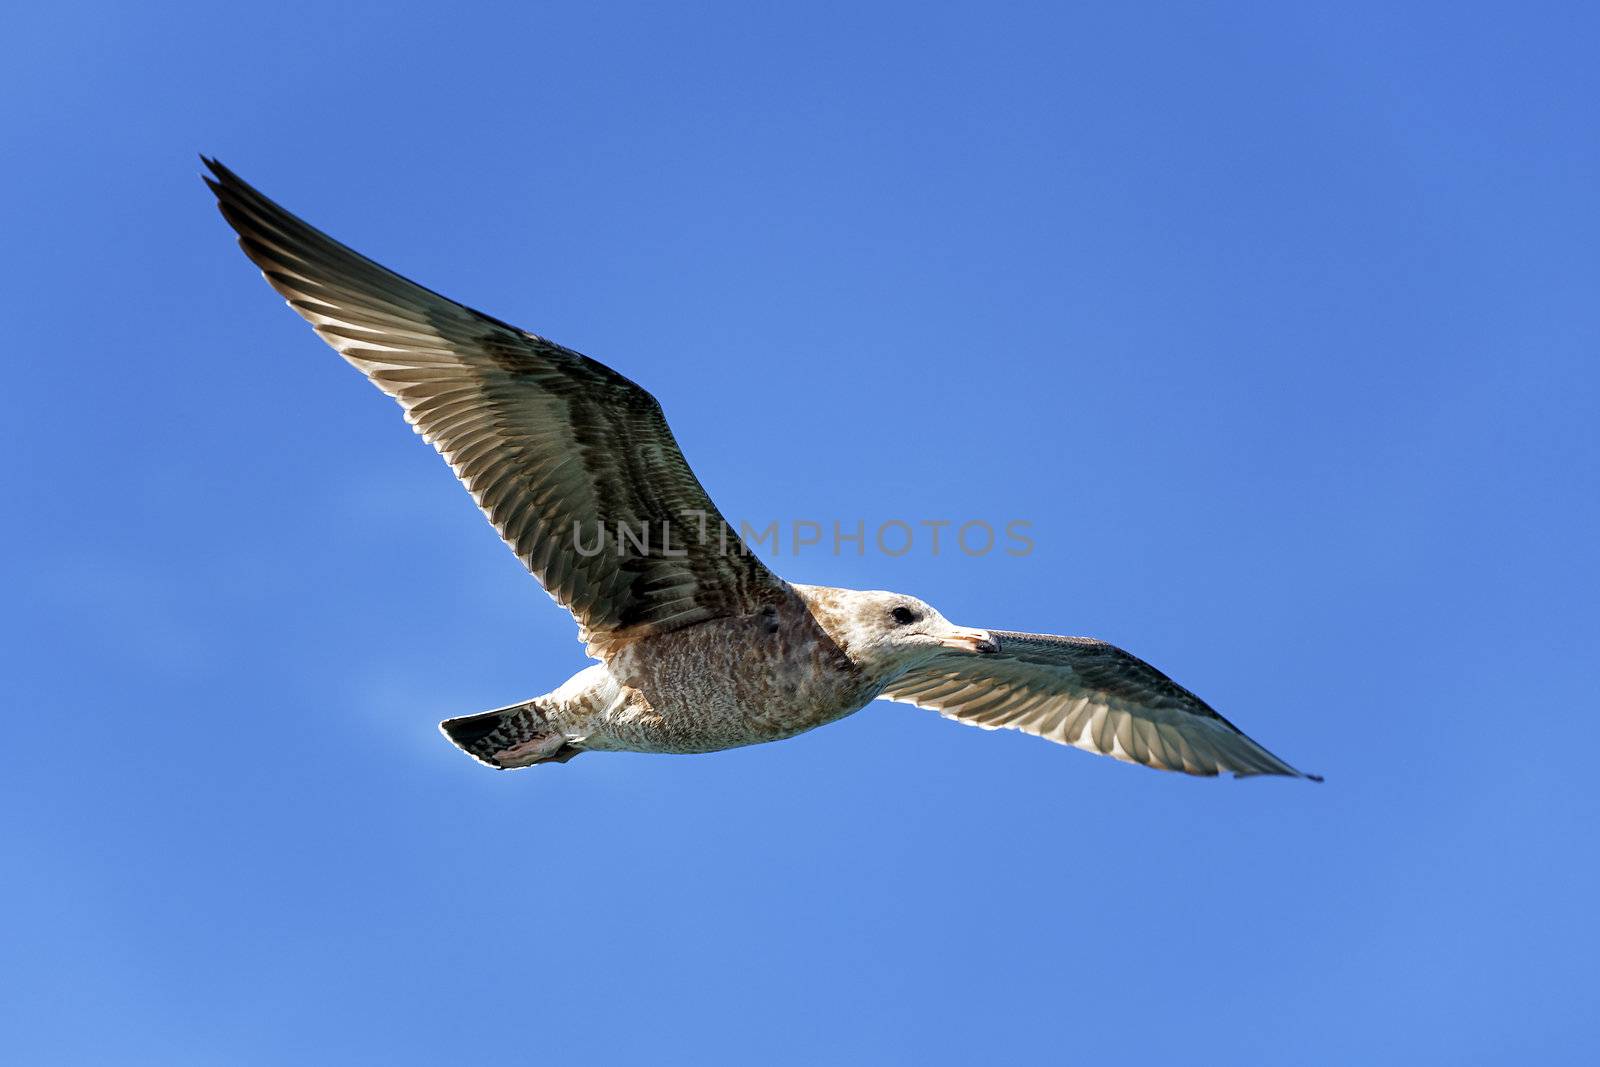 flying seagull in blue sky